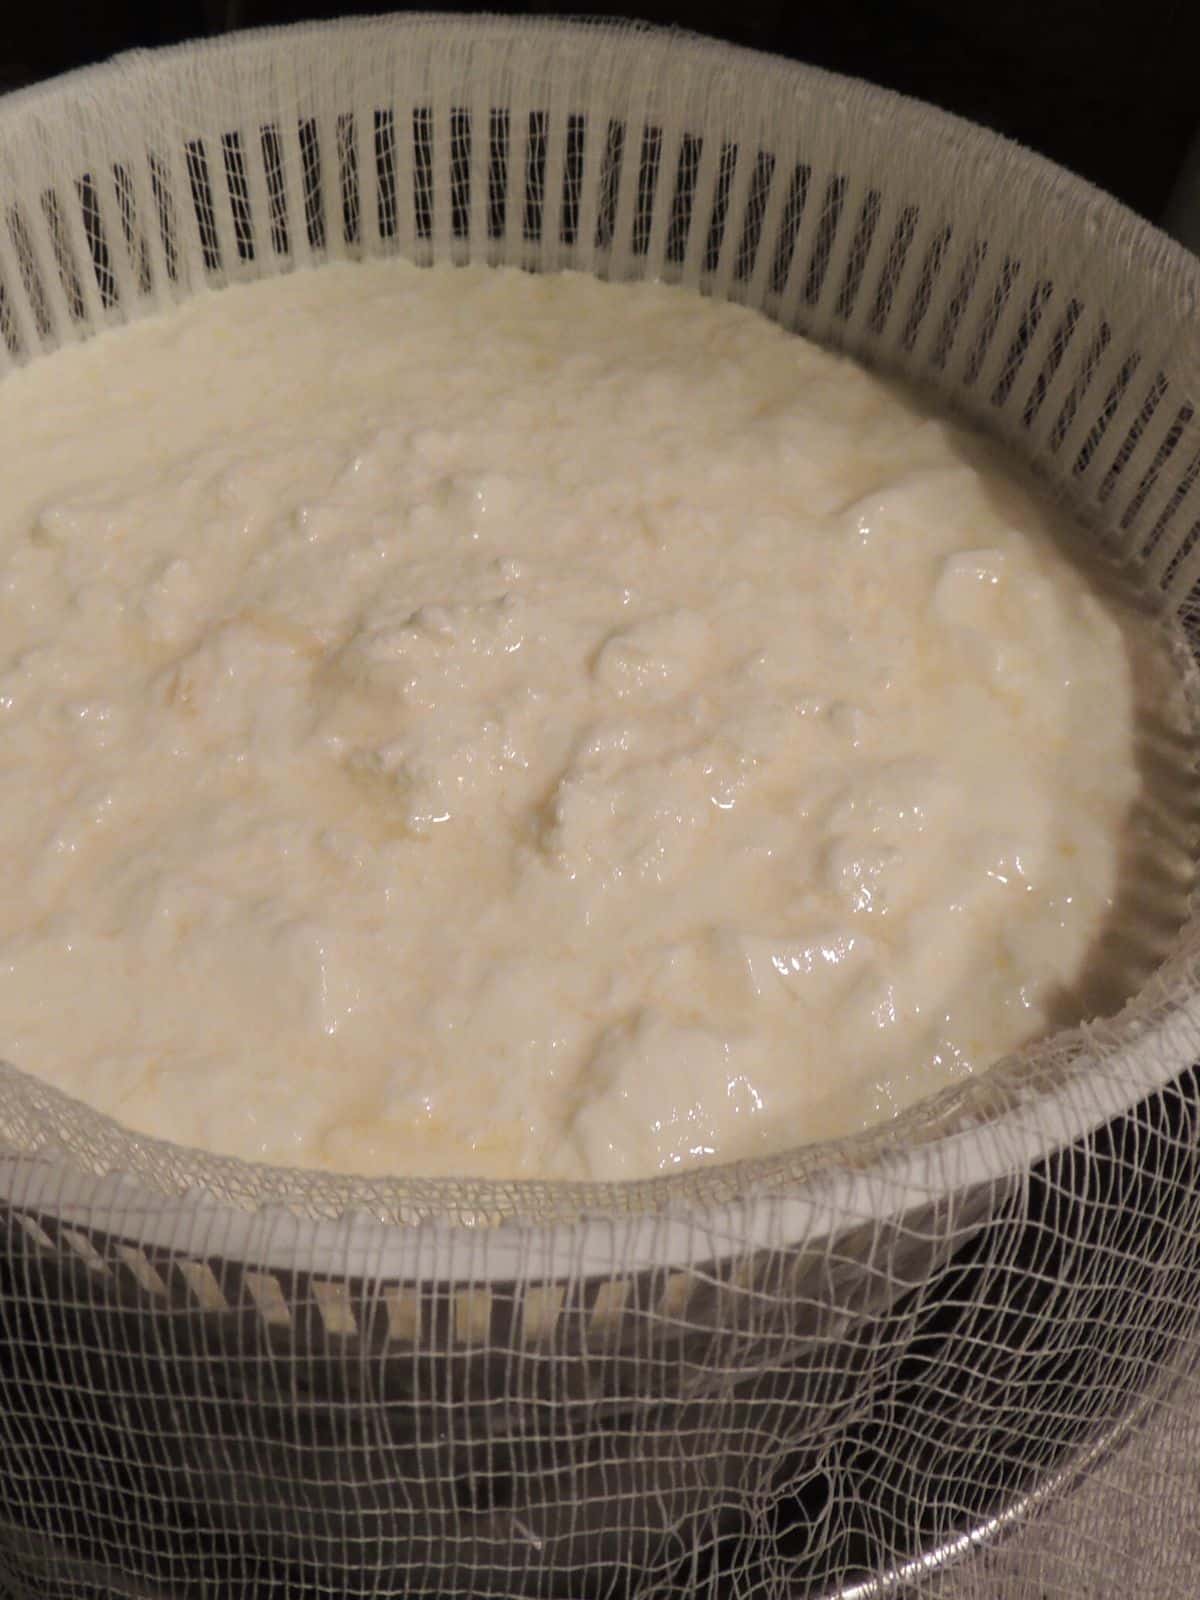 fresh made yogurt in cheesecloth to drain.